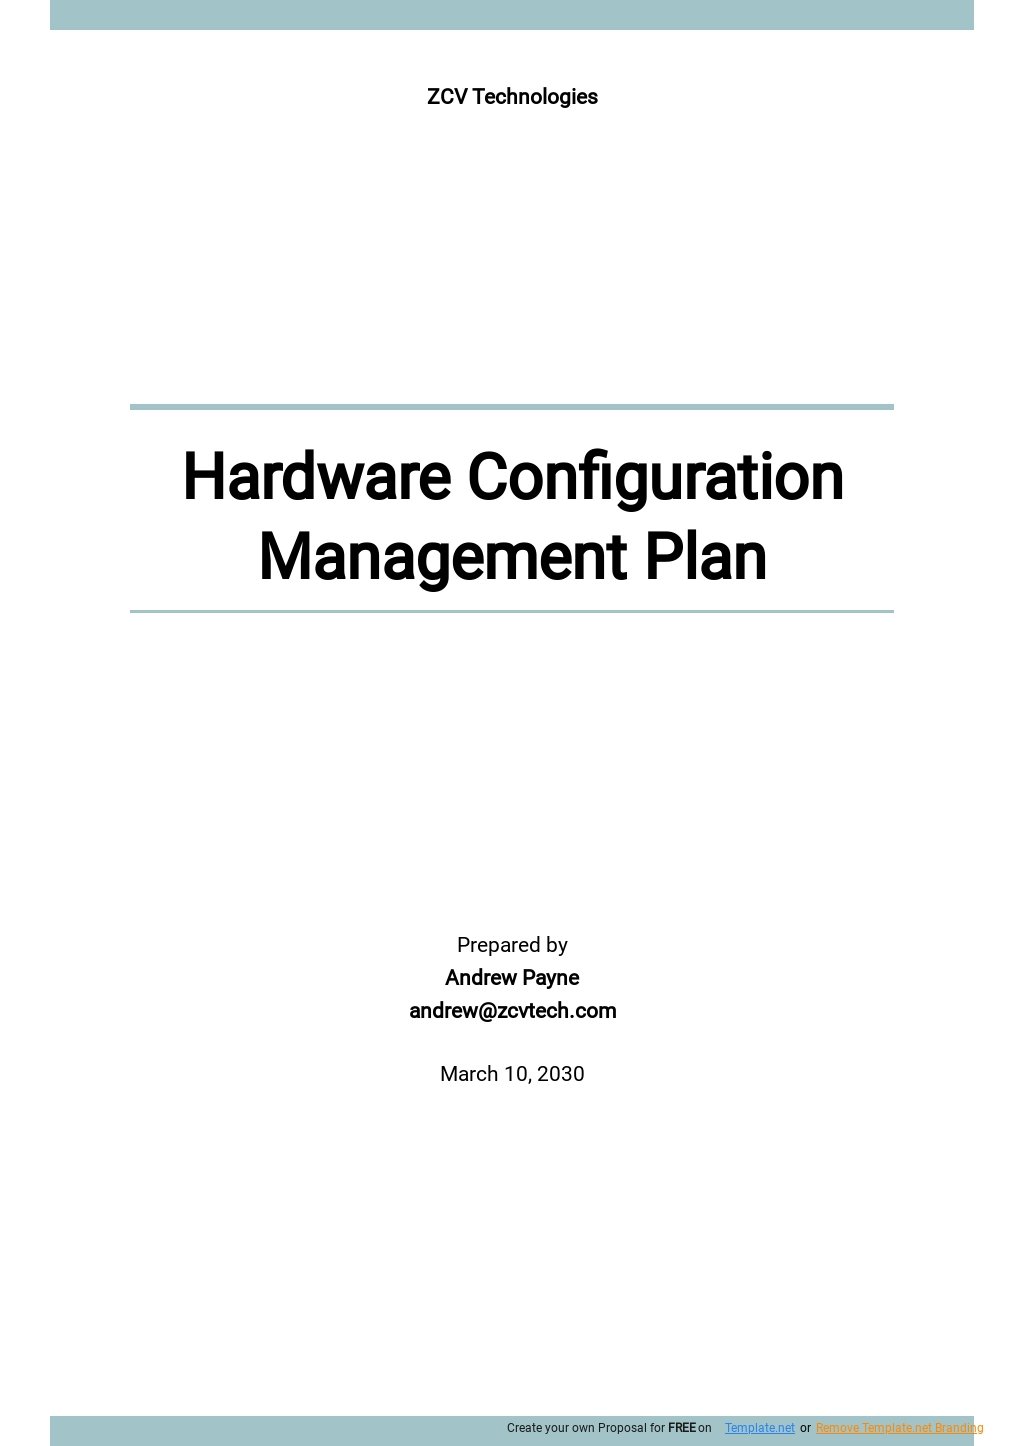 hardware-configuration-management-plan-template-google-docs-word